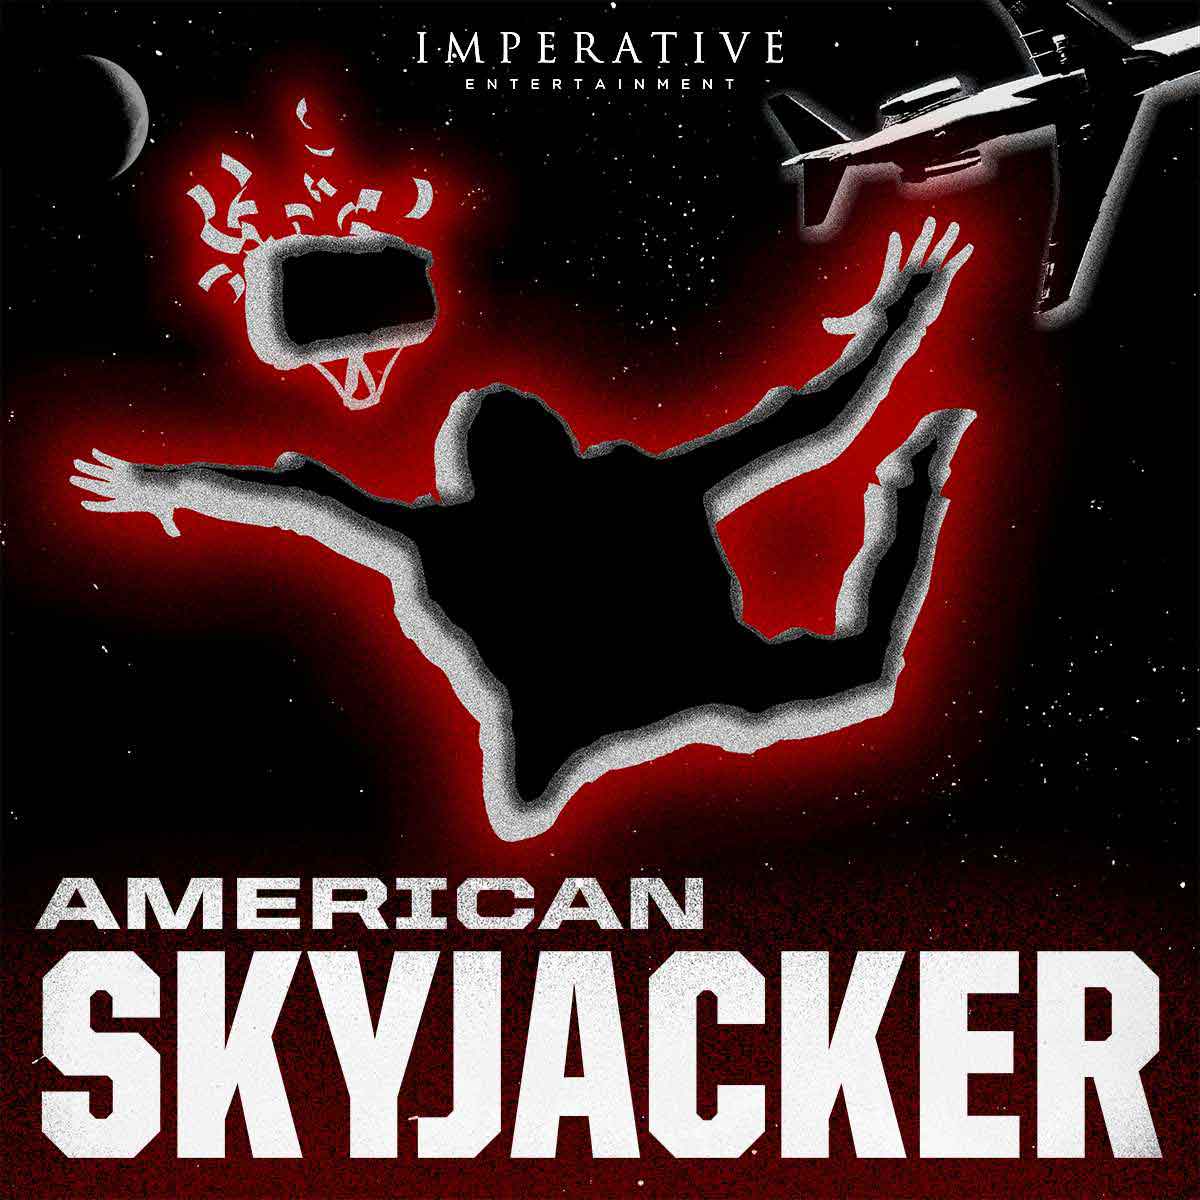 American Skyjacker